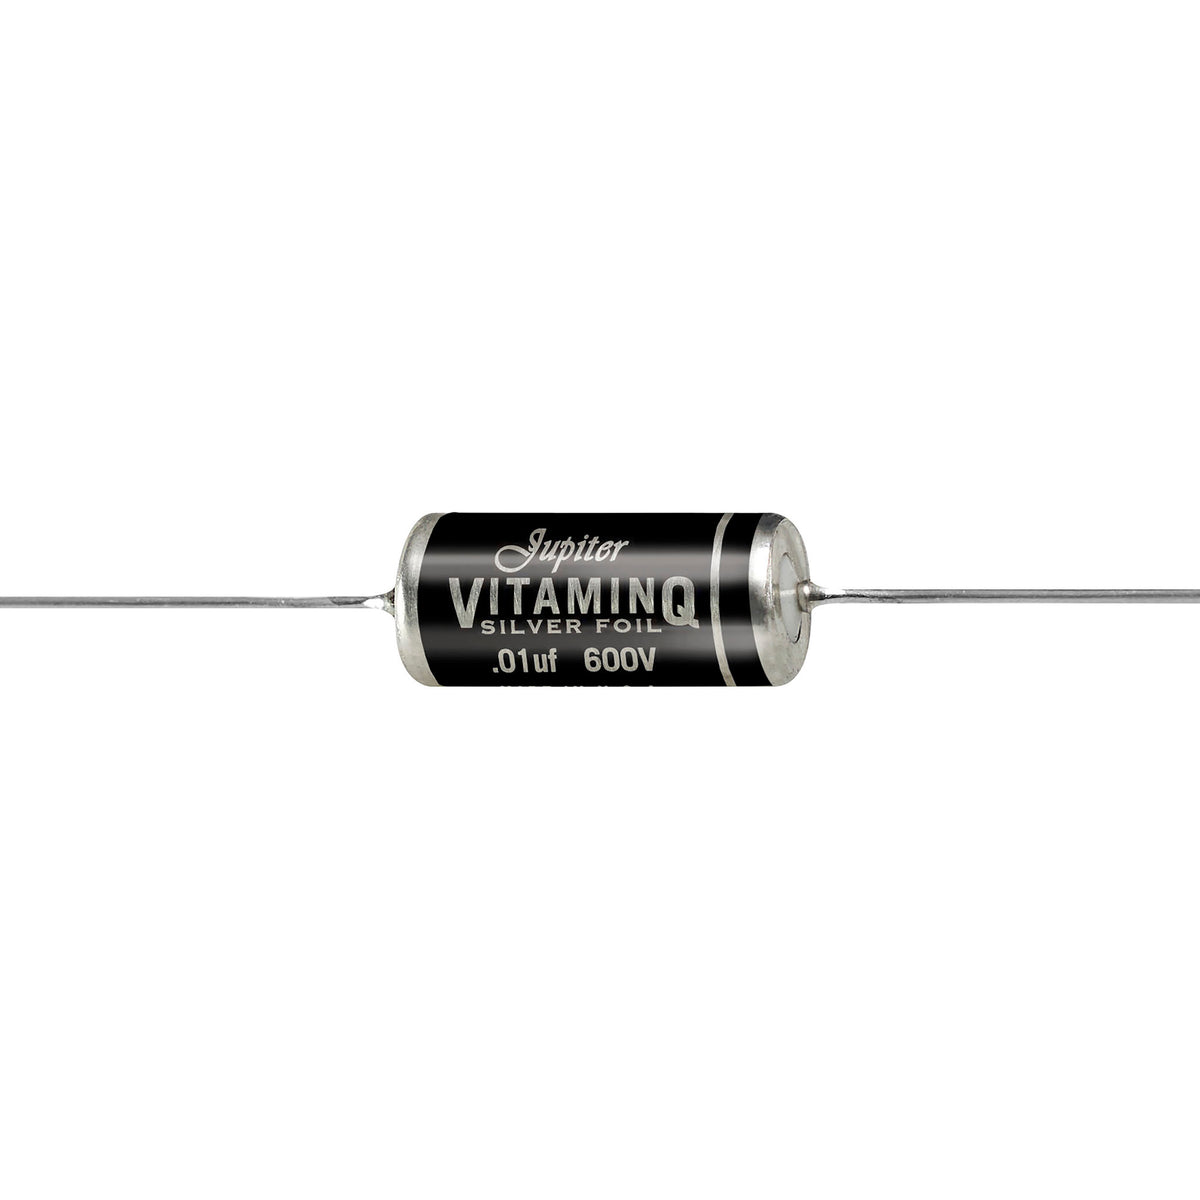 VitaminQ - Silver Foil Paper-in-Oil Capacitors